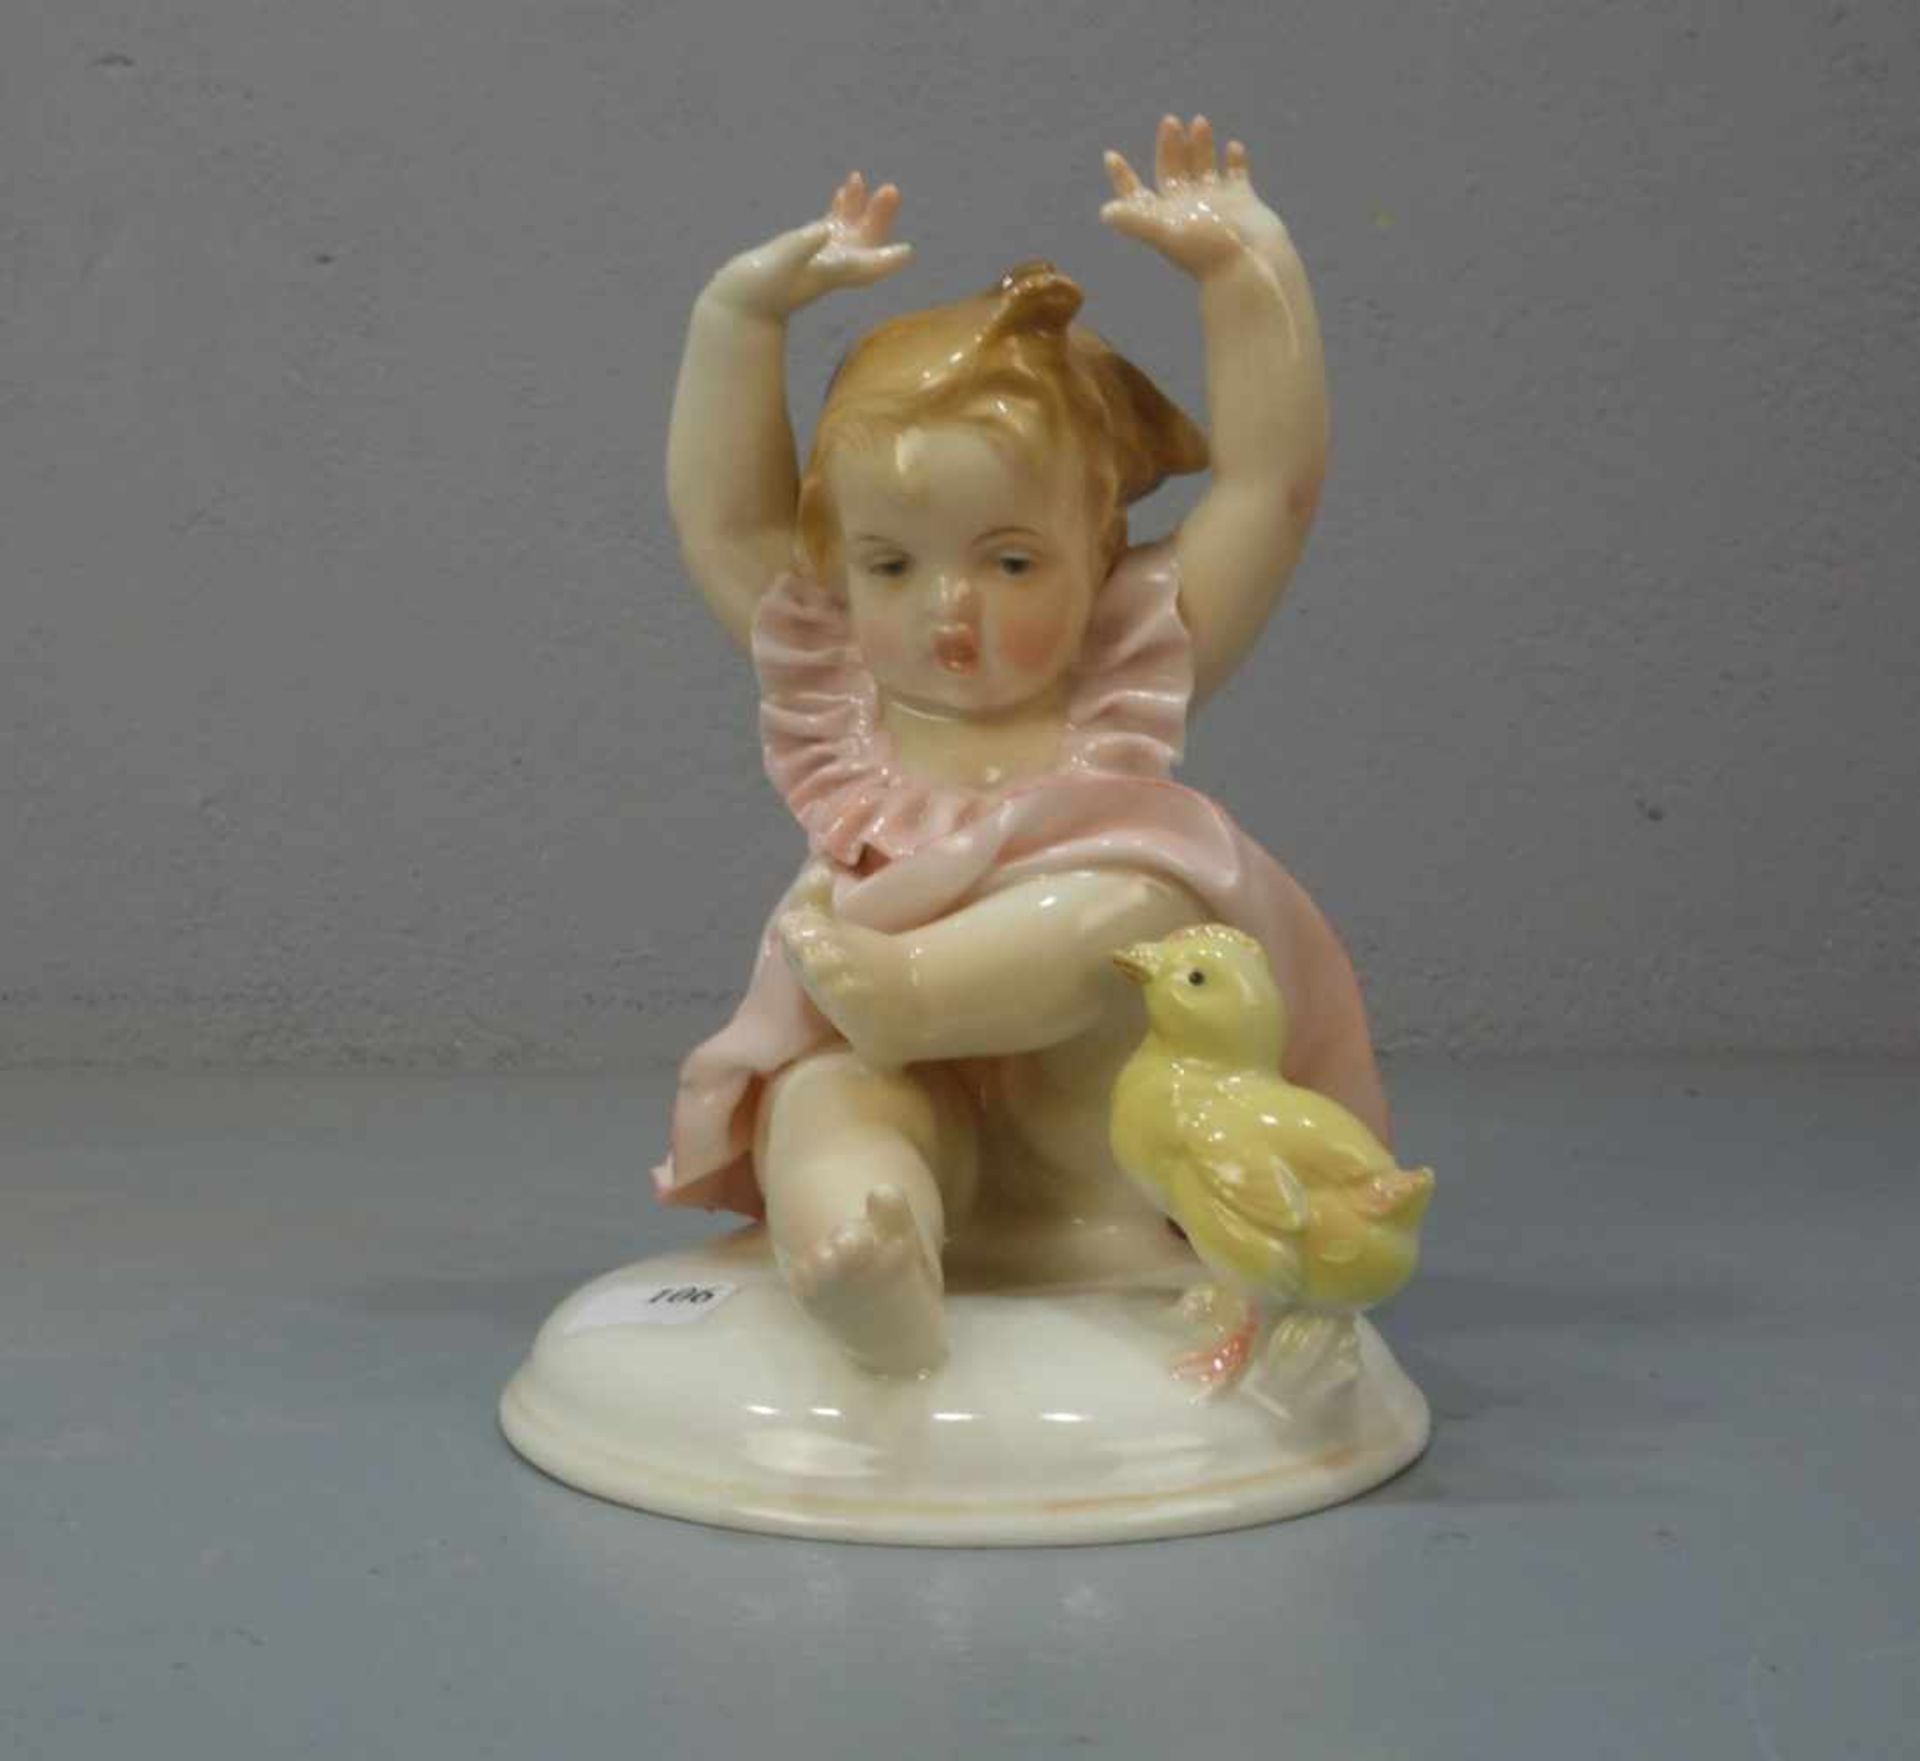 PORZELLANFIGUR: "Mädchen mit Küken" / porcelain figure "girl with chicklet", 1. Hälfte 20. Jh., - Bild 2 aus 6